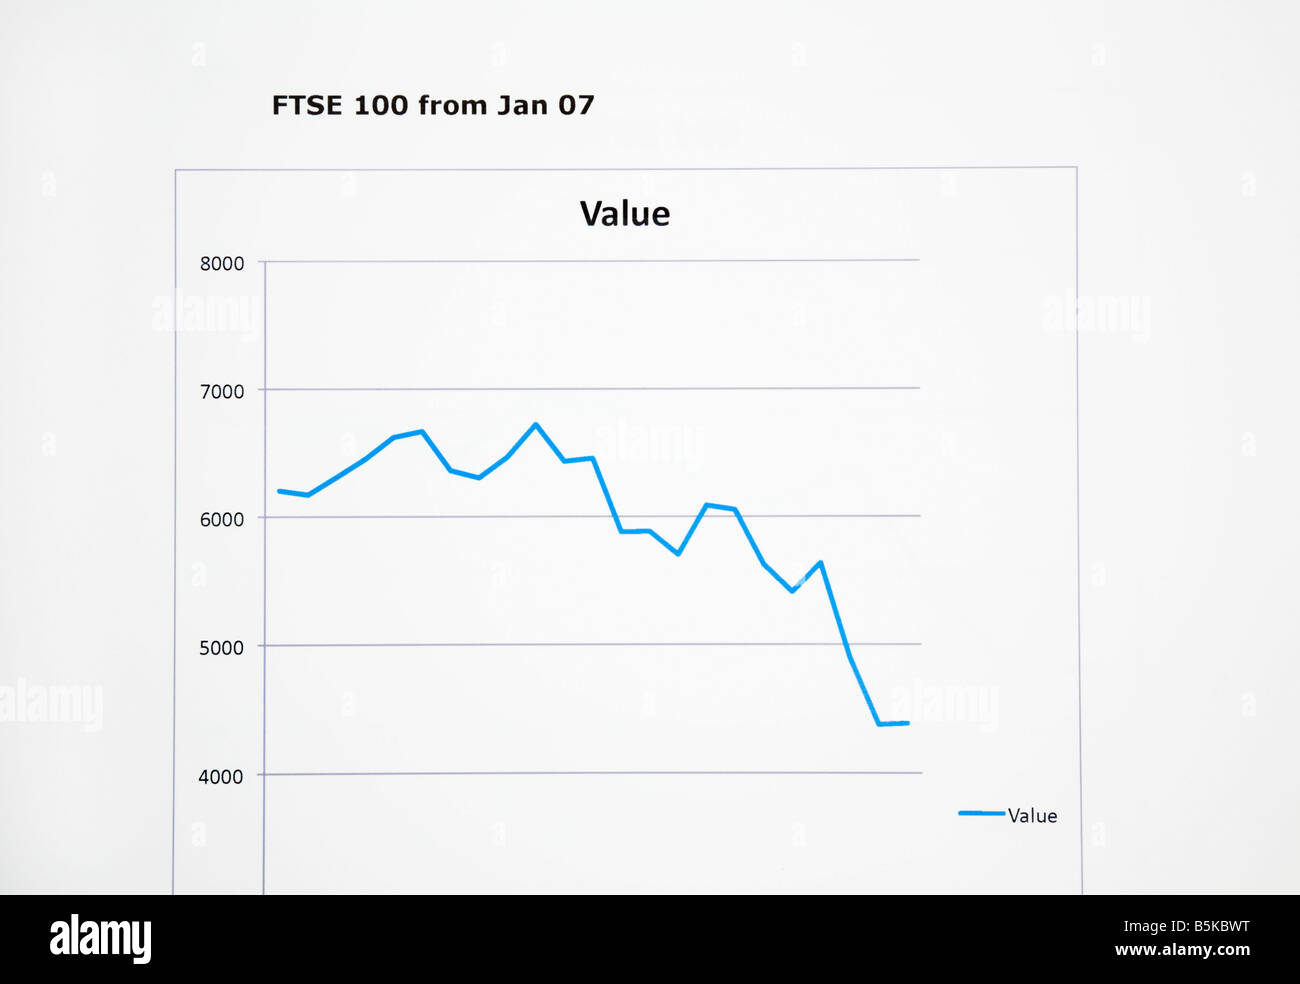 ftse share price graph